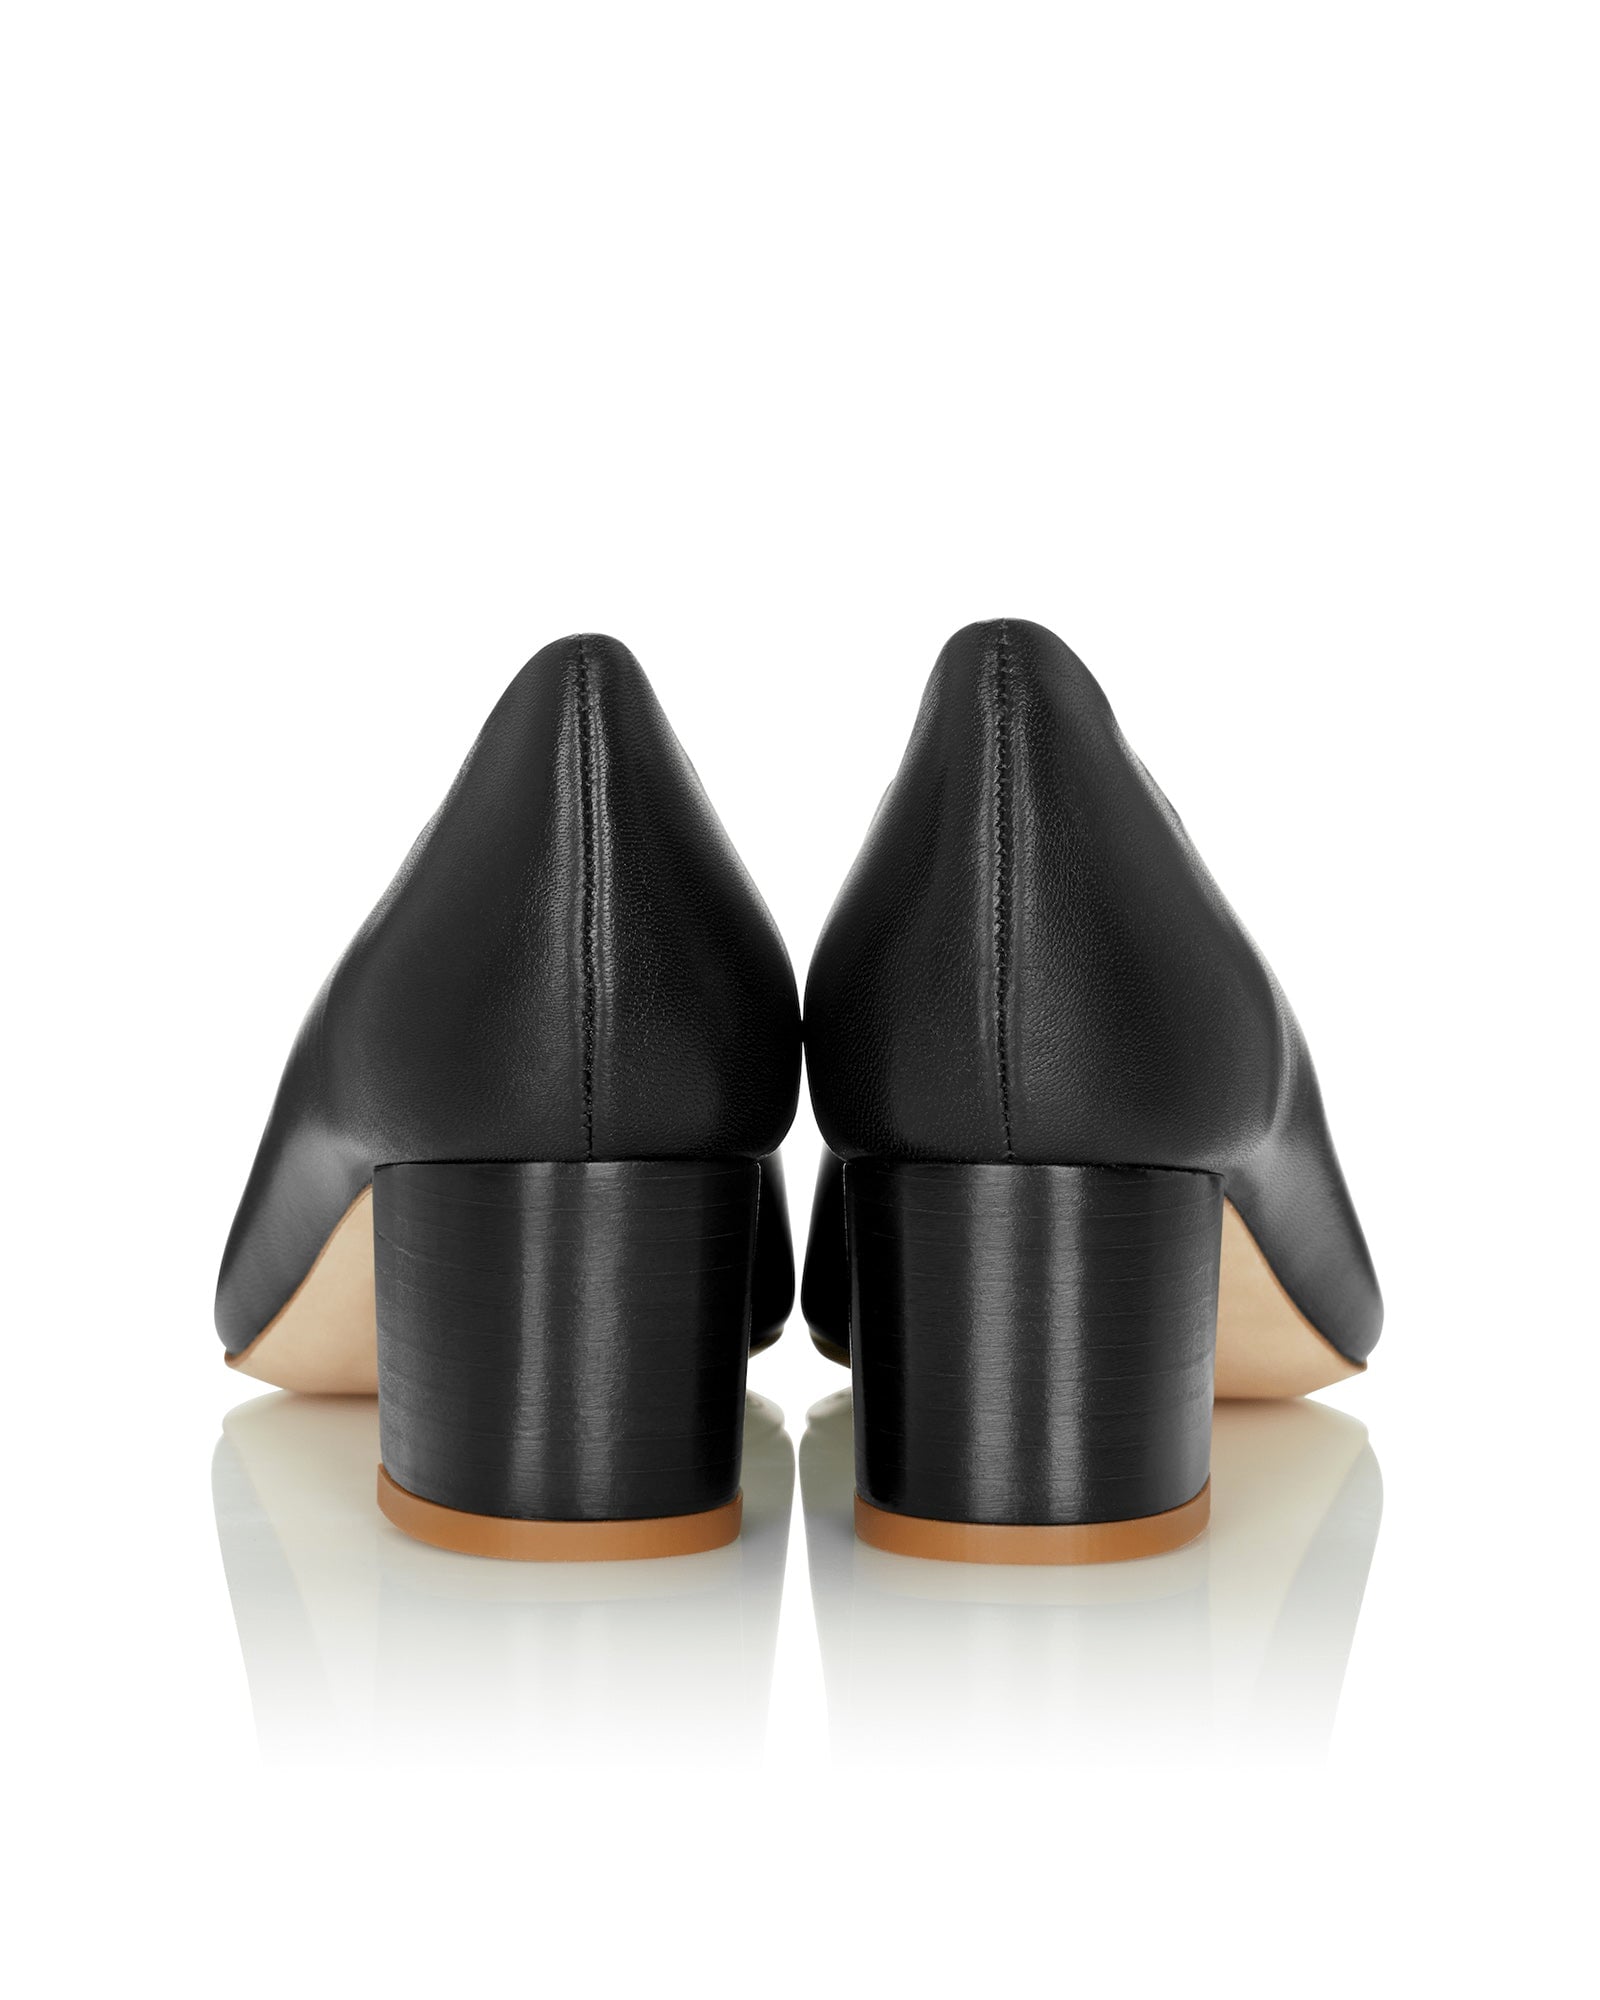 Mia Kitten Black Leather Fashion Shoe Block Heel Court Shoe  image